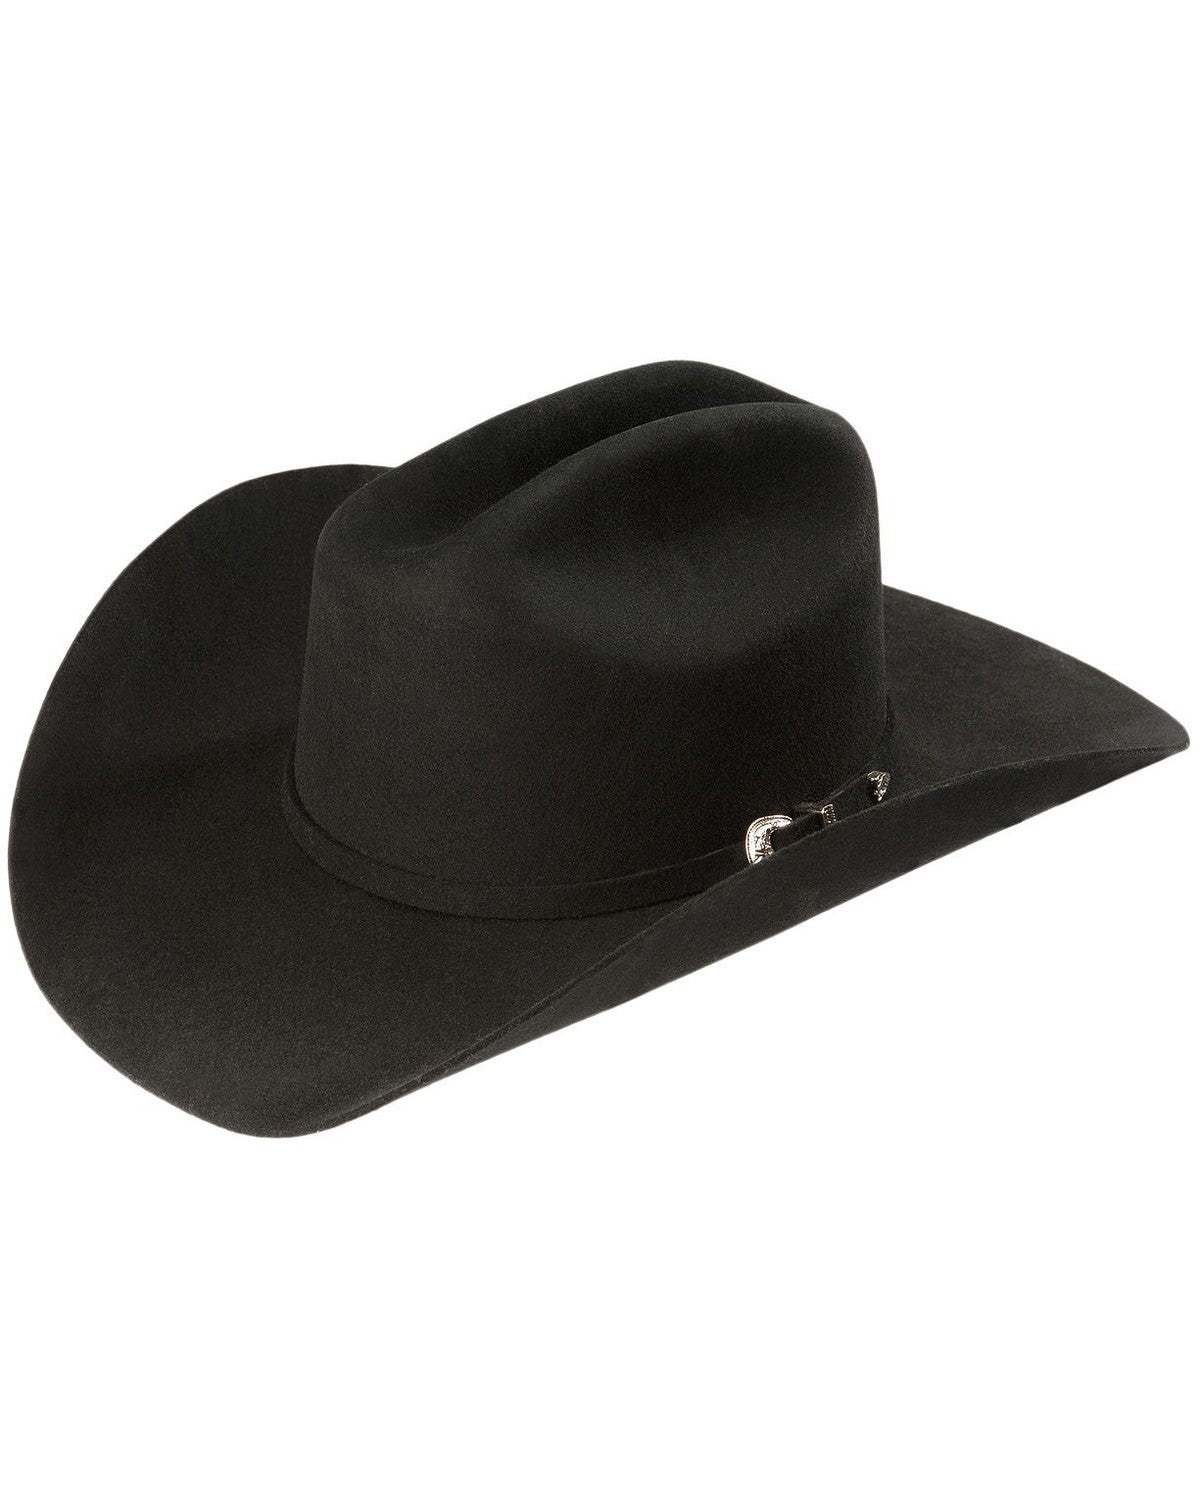 Justin 3X Rodeo Felt Hat - Black